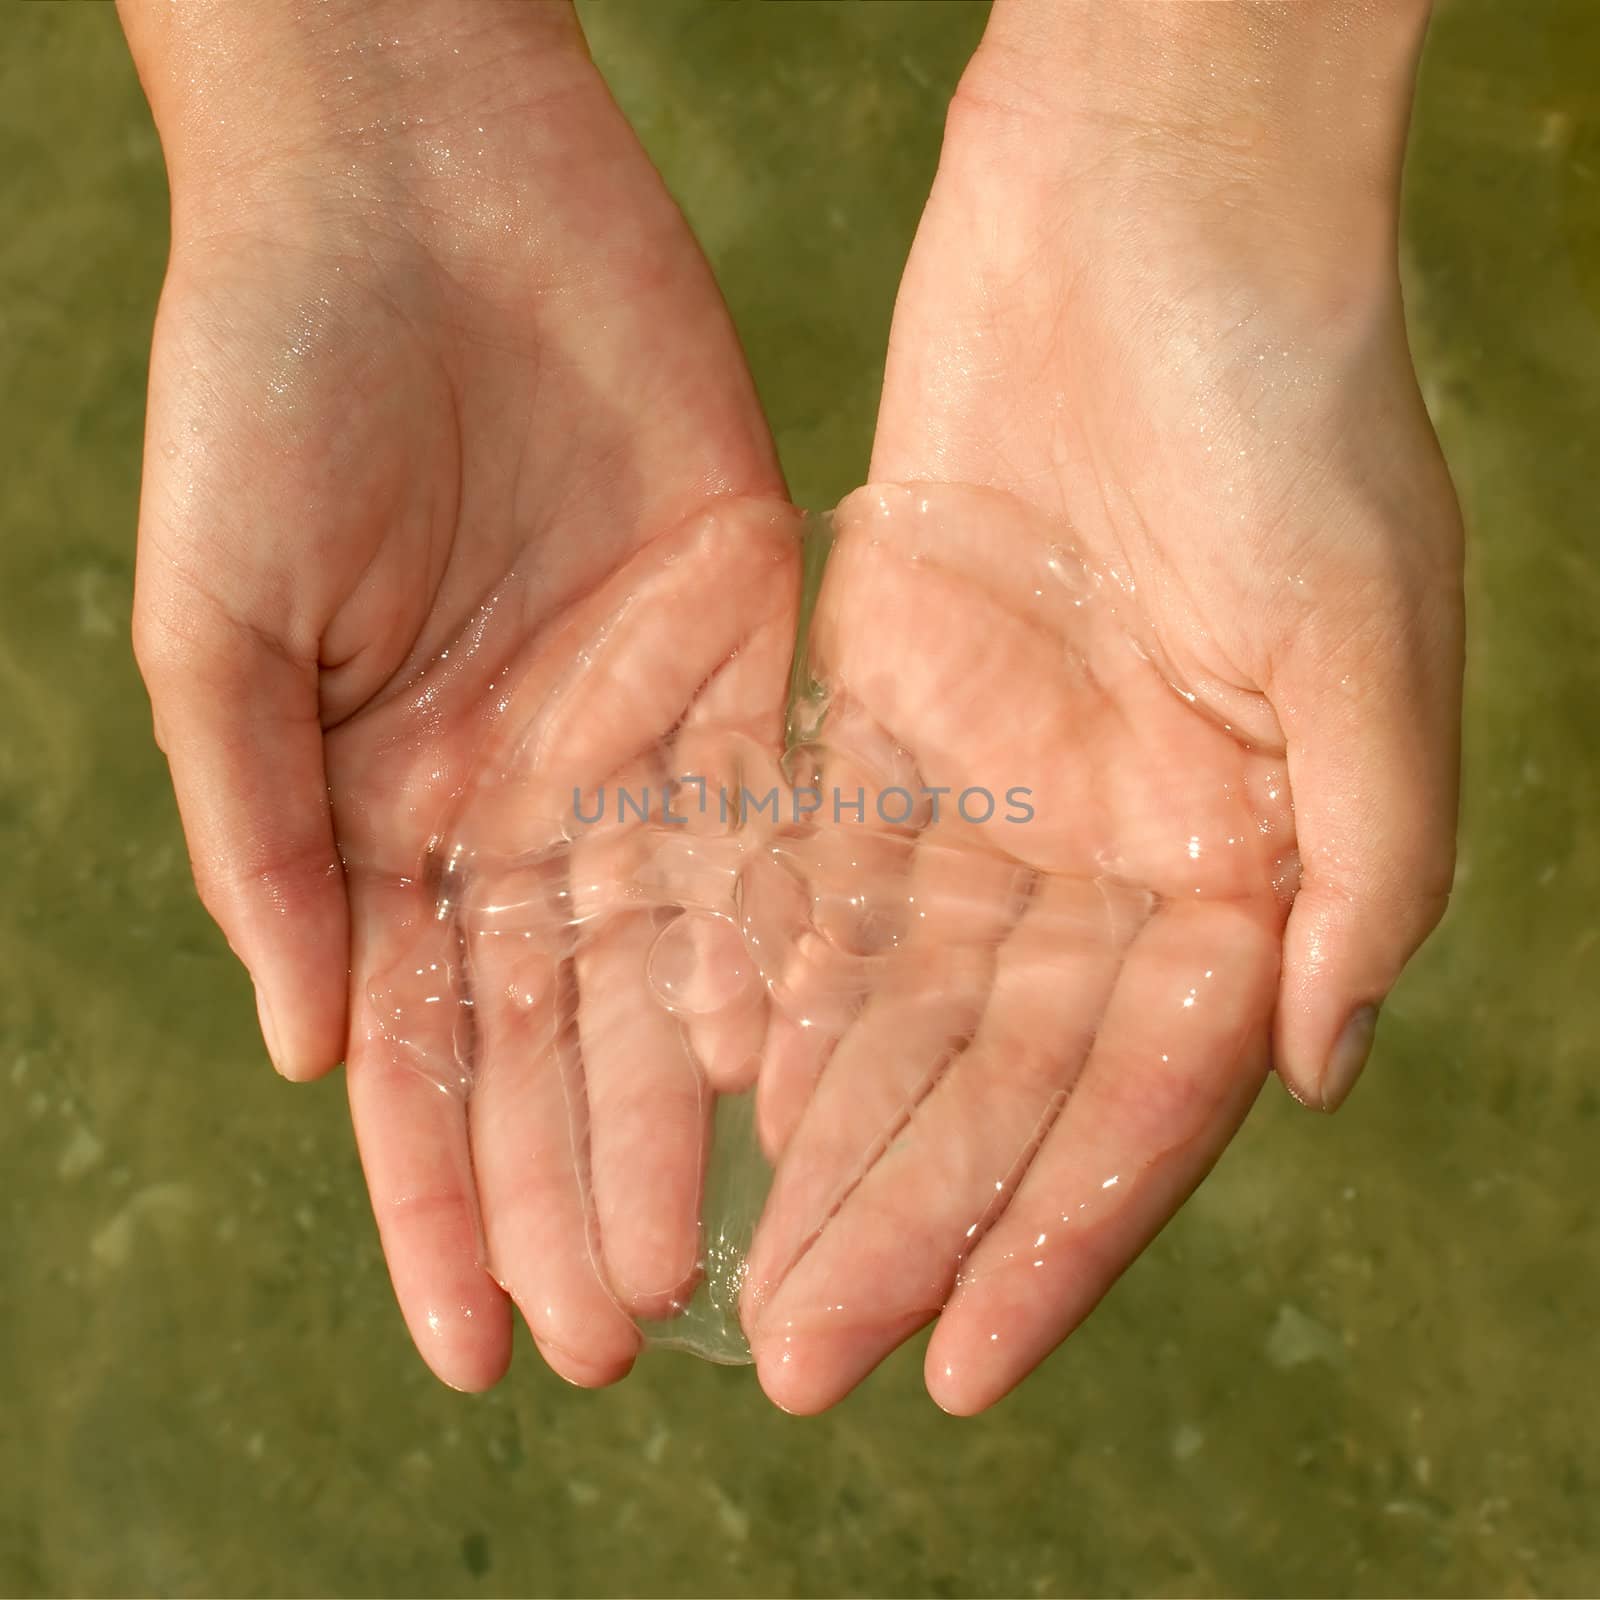 Jellyfish in women's hands by qiiip